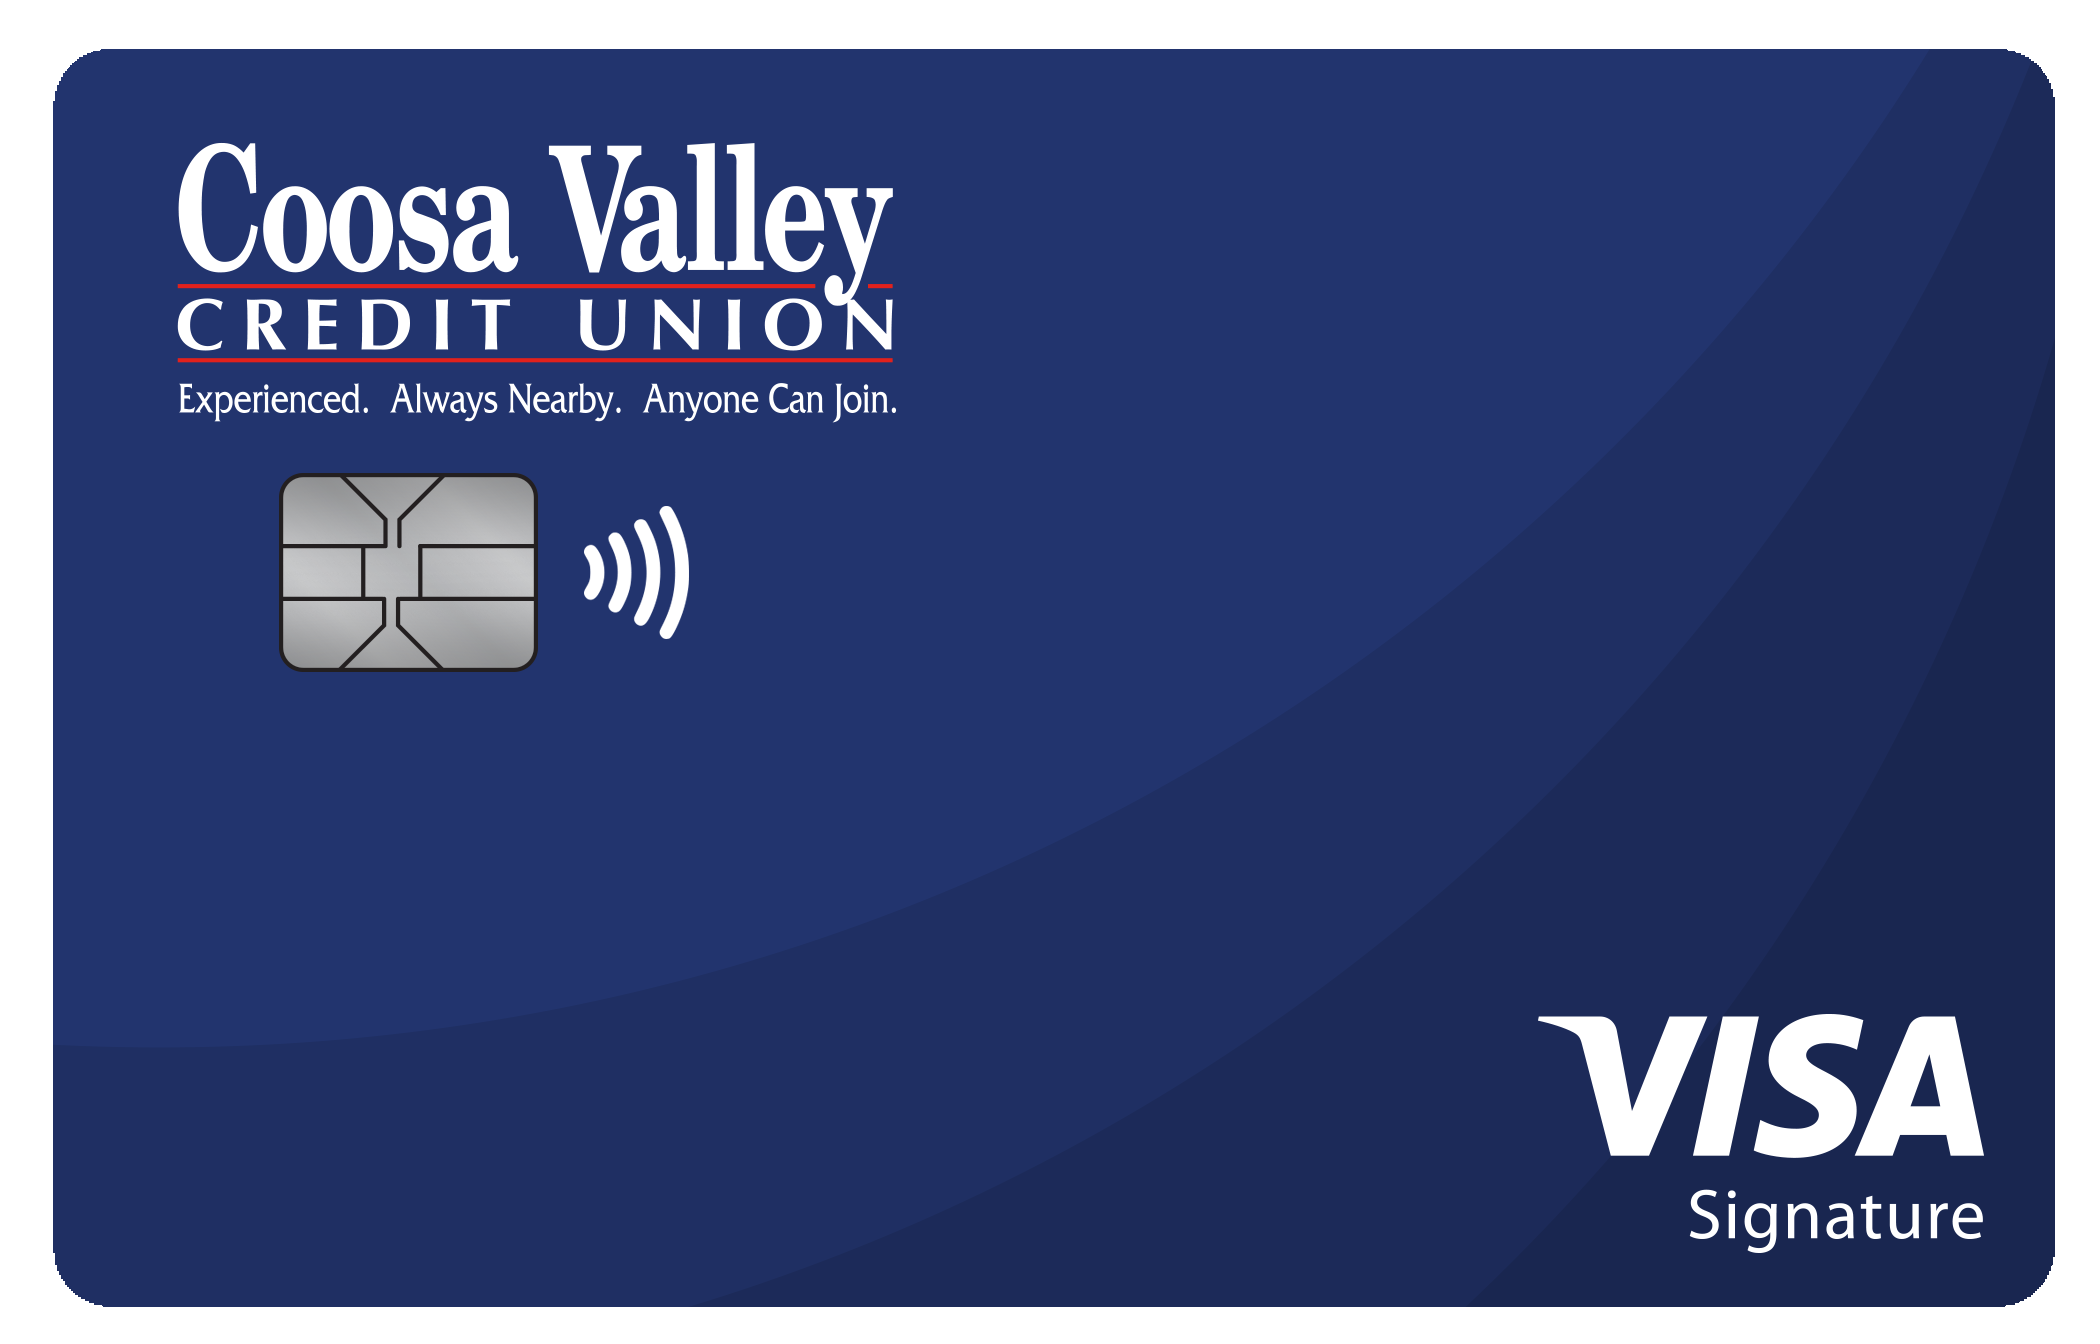 Coosa Valley Credit Union Travel Rewards+ Card